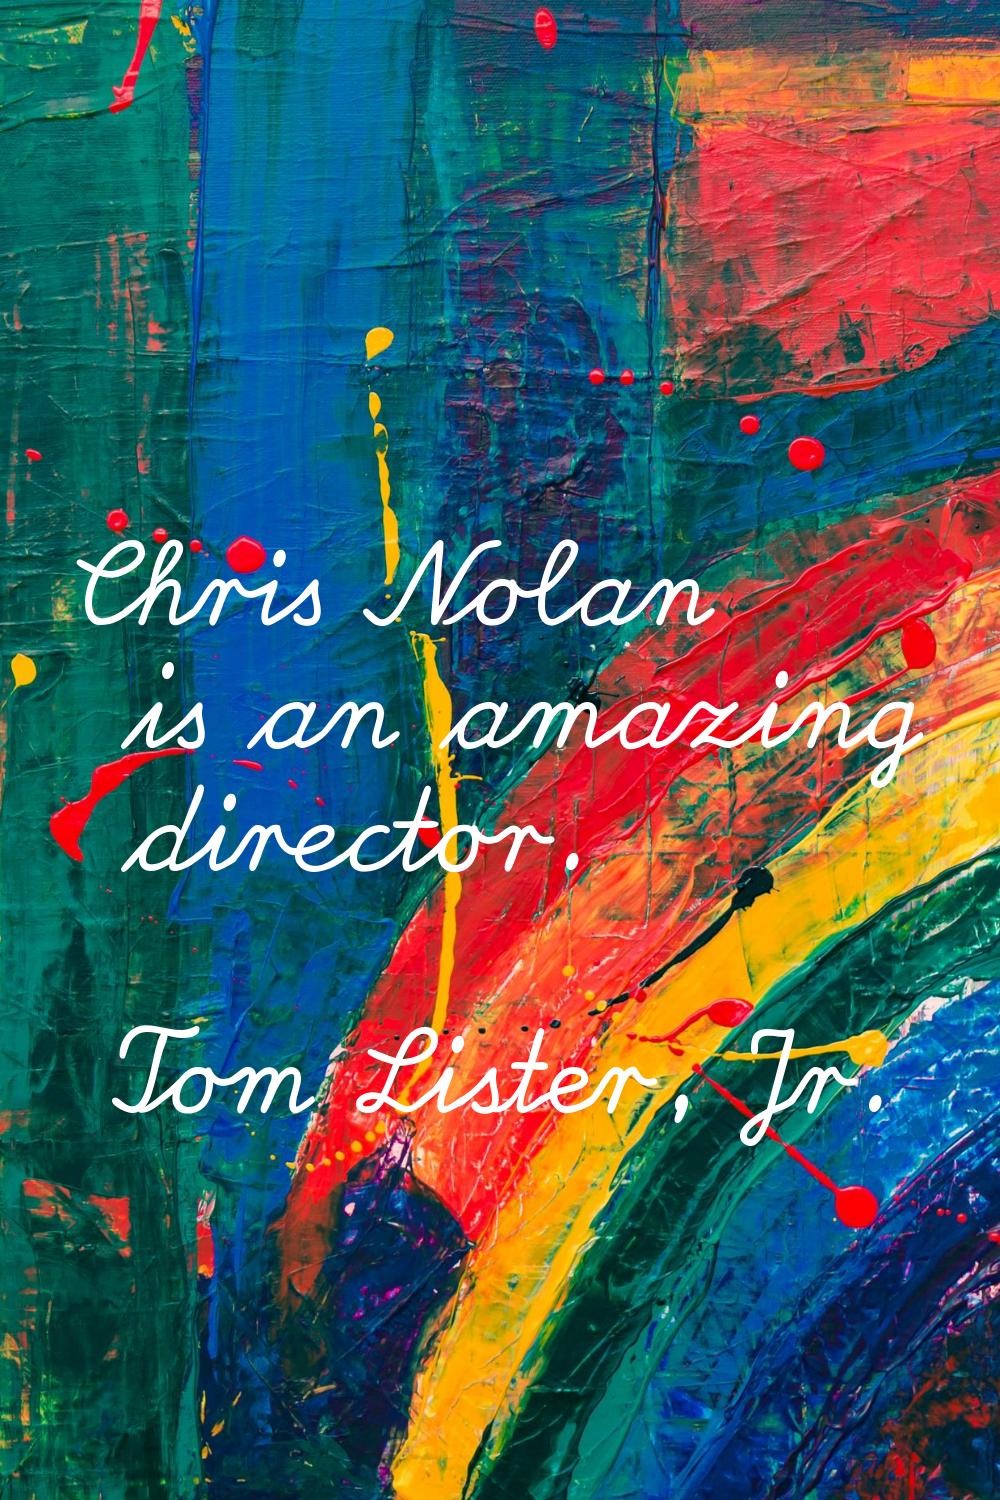 Chris Nolan is an amazing director.